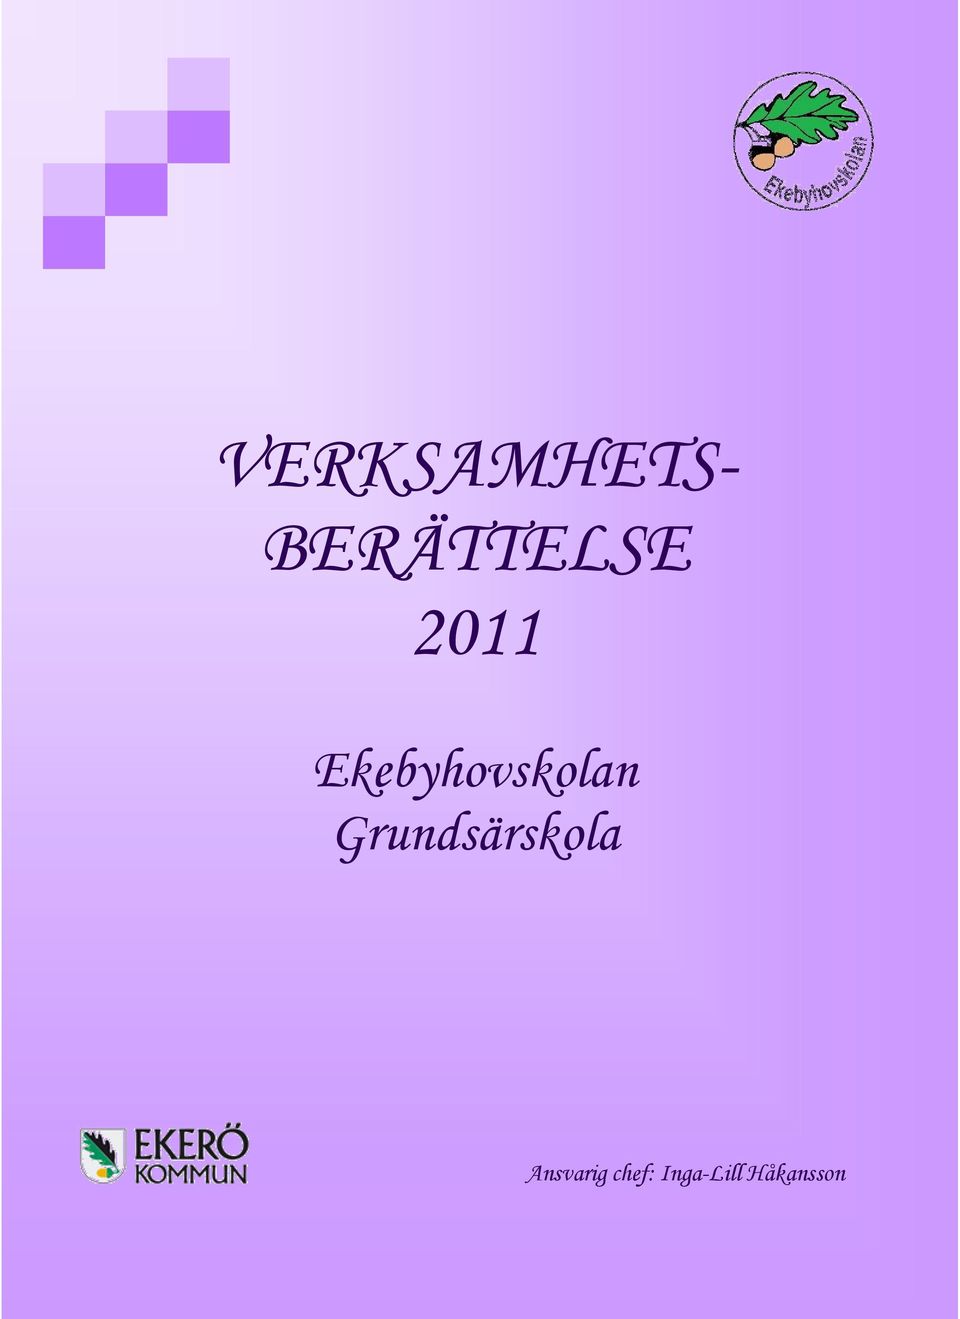 BERÄTTELSE 2011 Ekebyhovskolan